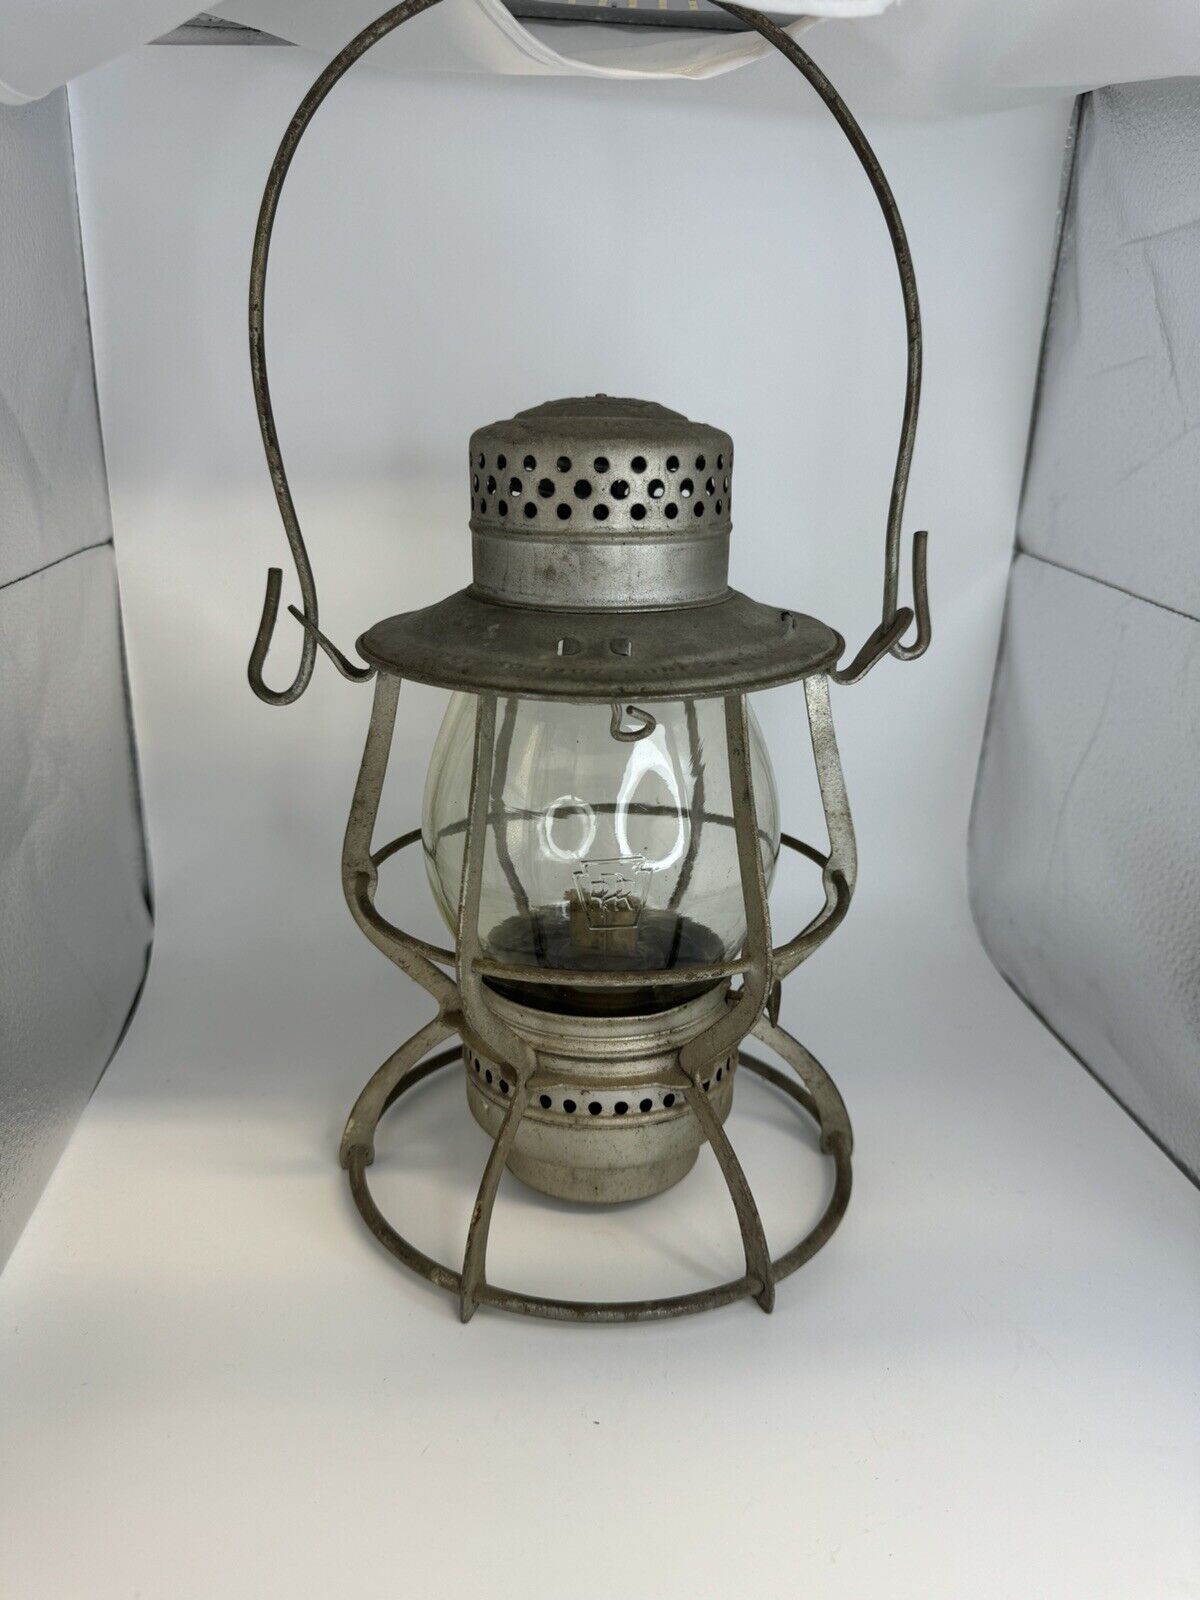 Keystone Lantern Co. No. 39 Dec. 30 1902 - 1903 Antique Lantern Philadelphia PRR